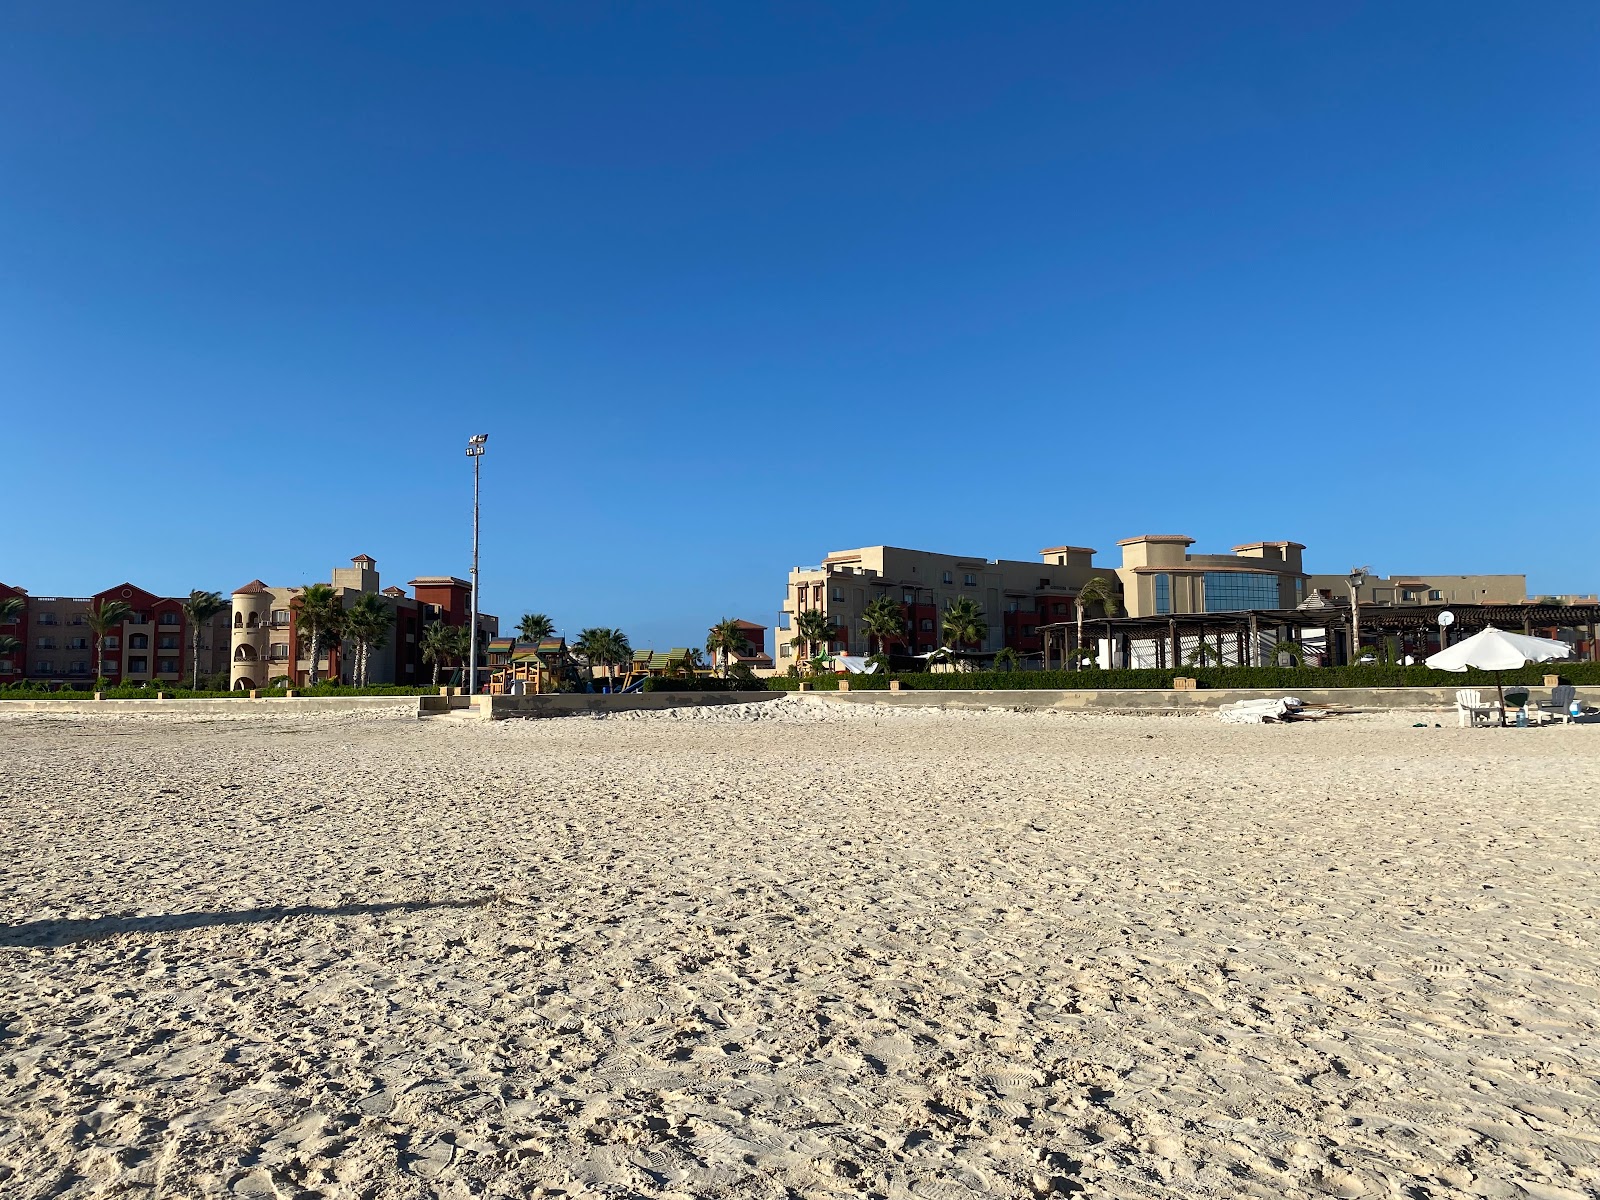 Foto de Eagles Resort in Cleopatra Beach - lugar popular entre os apreciadores de relaxamento